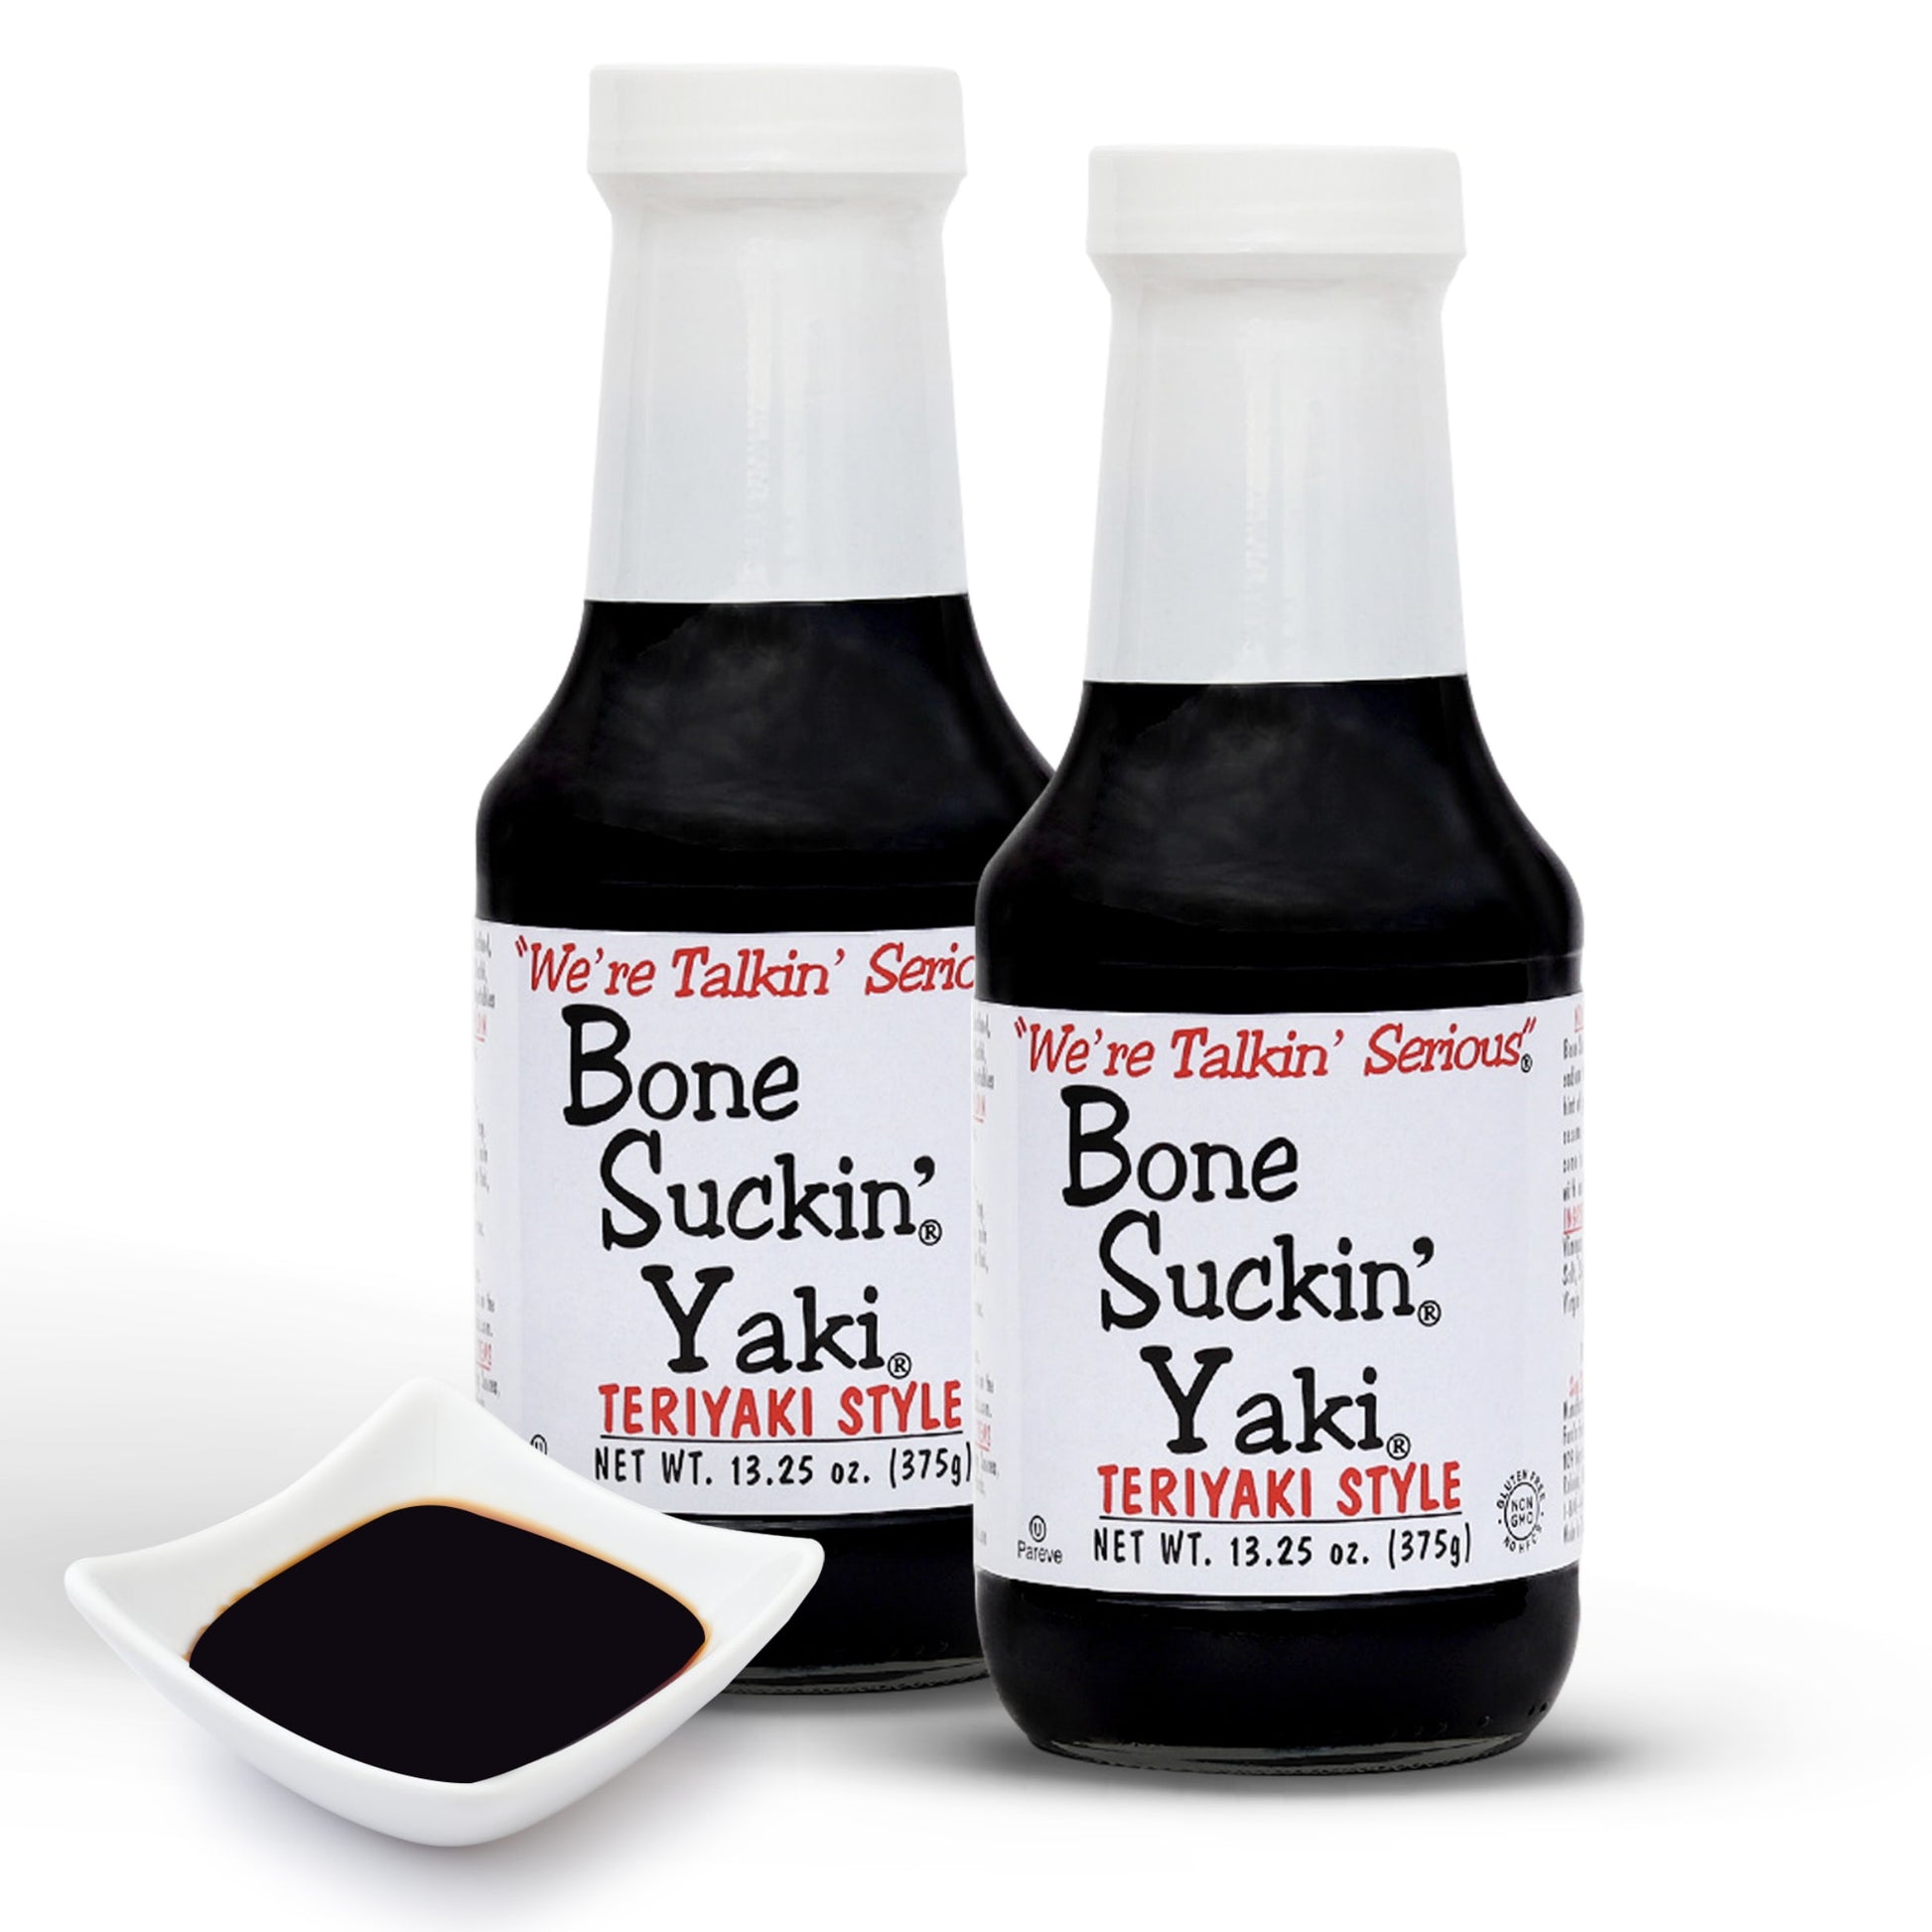 Bone Suckin' Yaki Teriyaki Style - 13.25 oz in Glass Bottle. For Pork Tenderloin, Salmon, Thin Cut Steaks, Stir Fry - Made w/ Tamari Soy Sauce, Balsamic Vinegar & Olive Oil. Gluten Free, Non-Gmo, Kosher . 2 pack